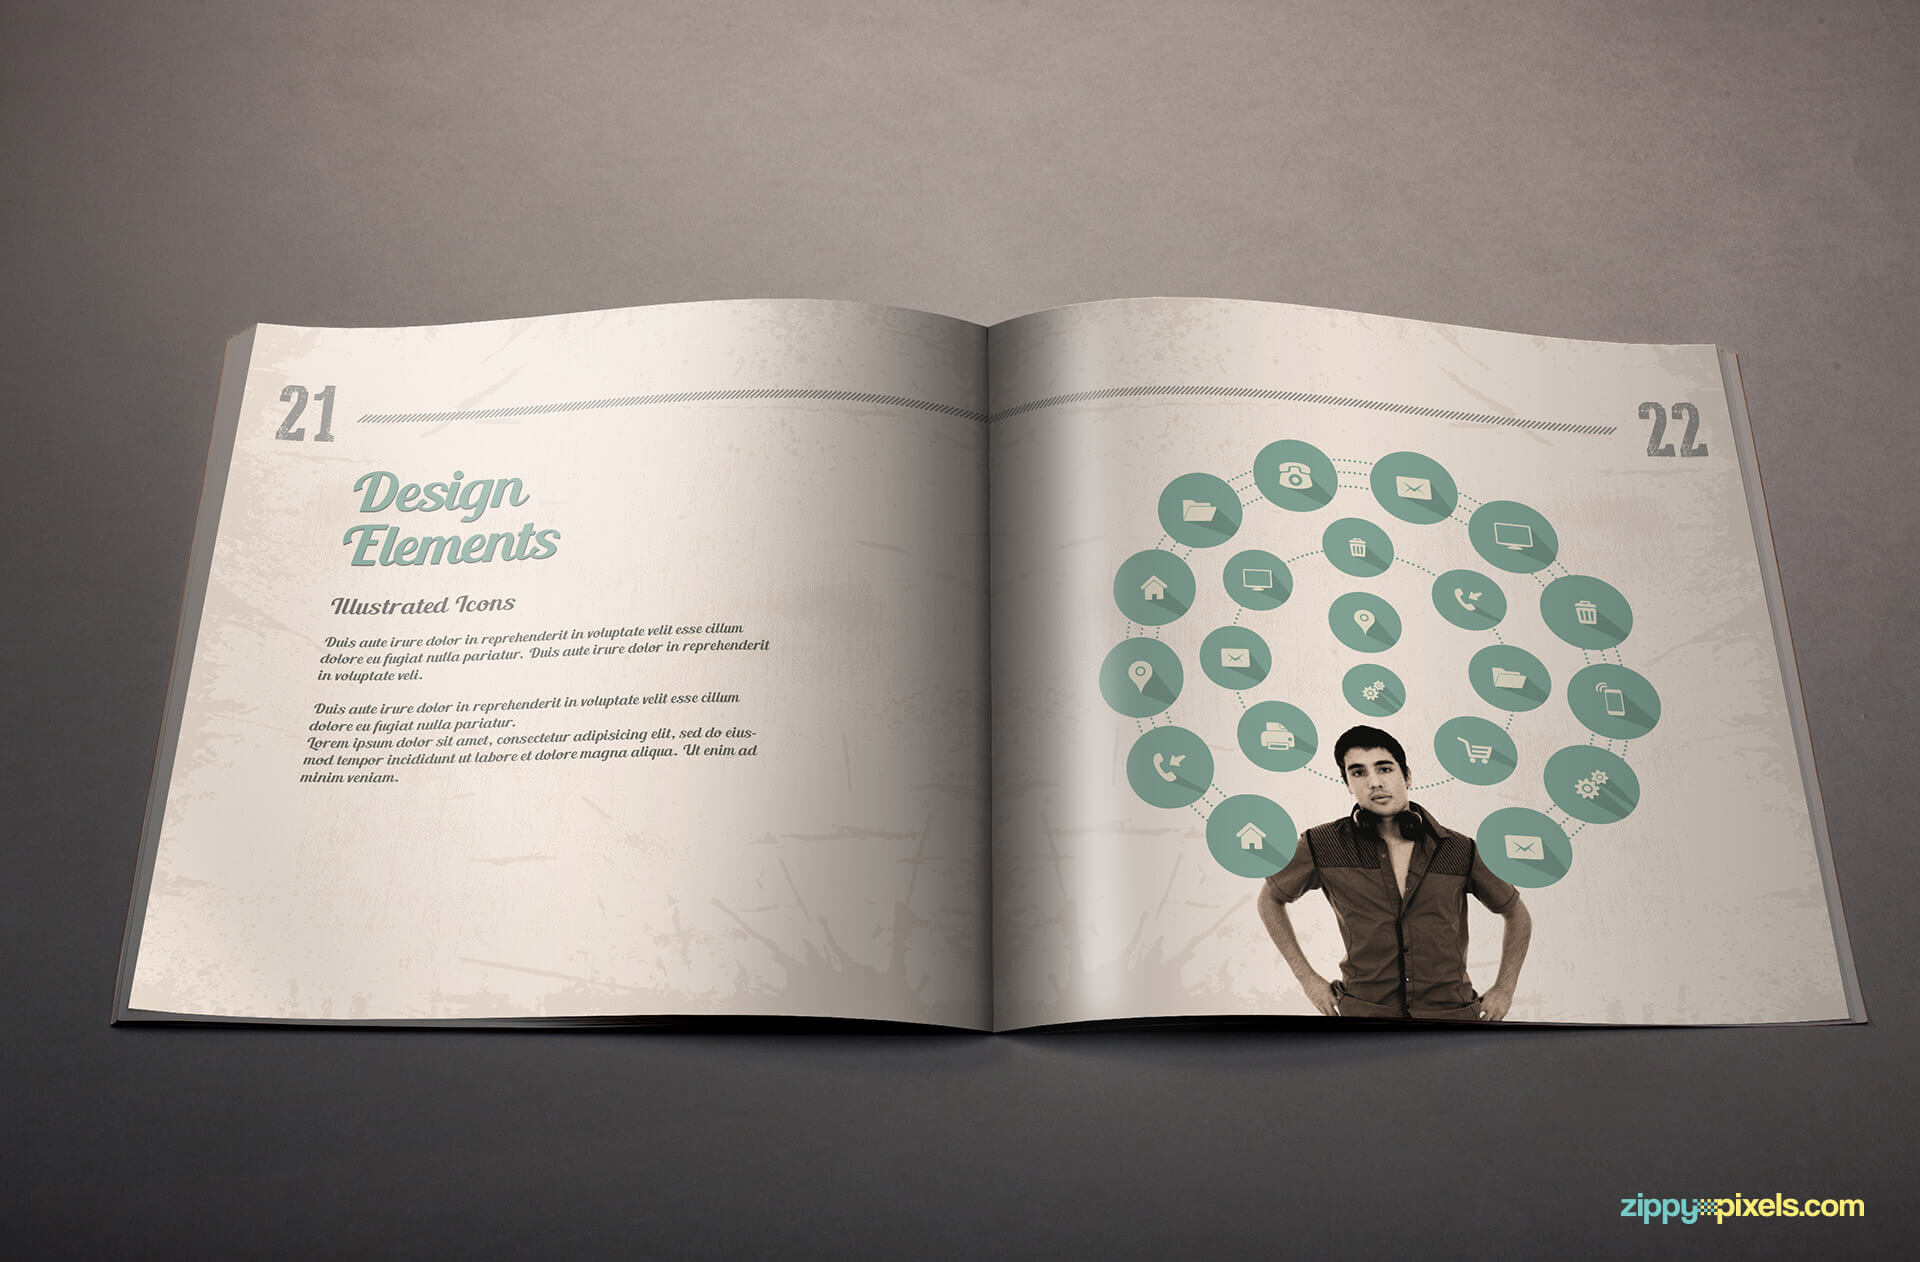 17-brand-book-13-design-elements